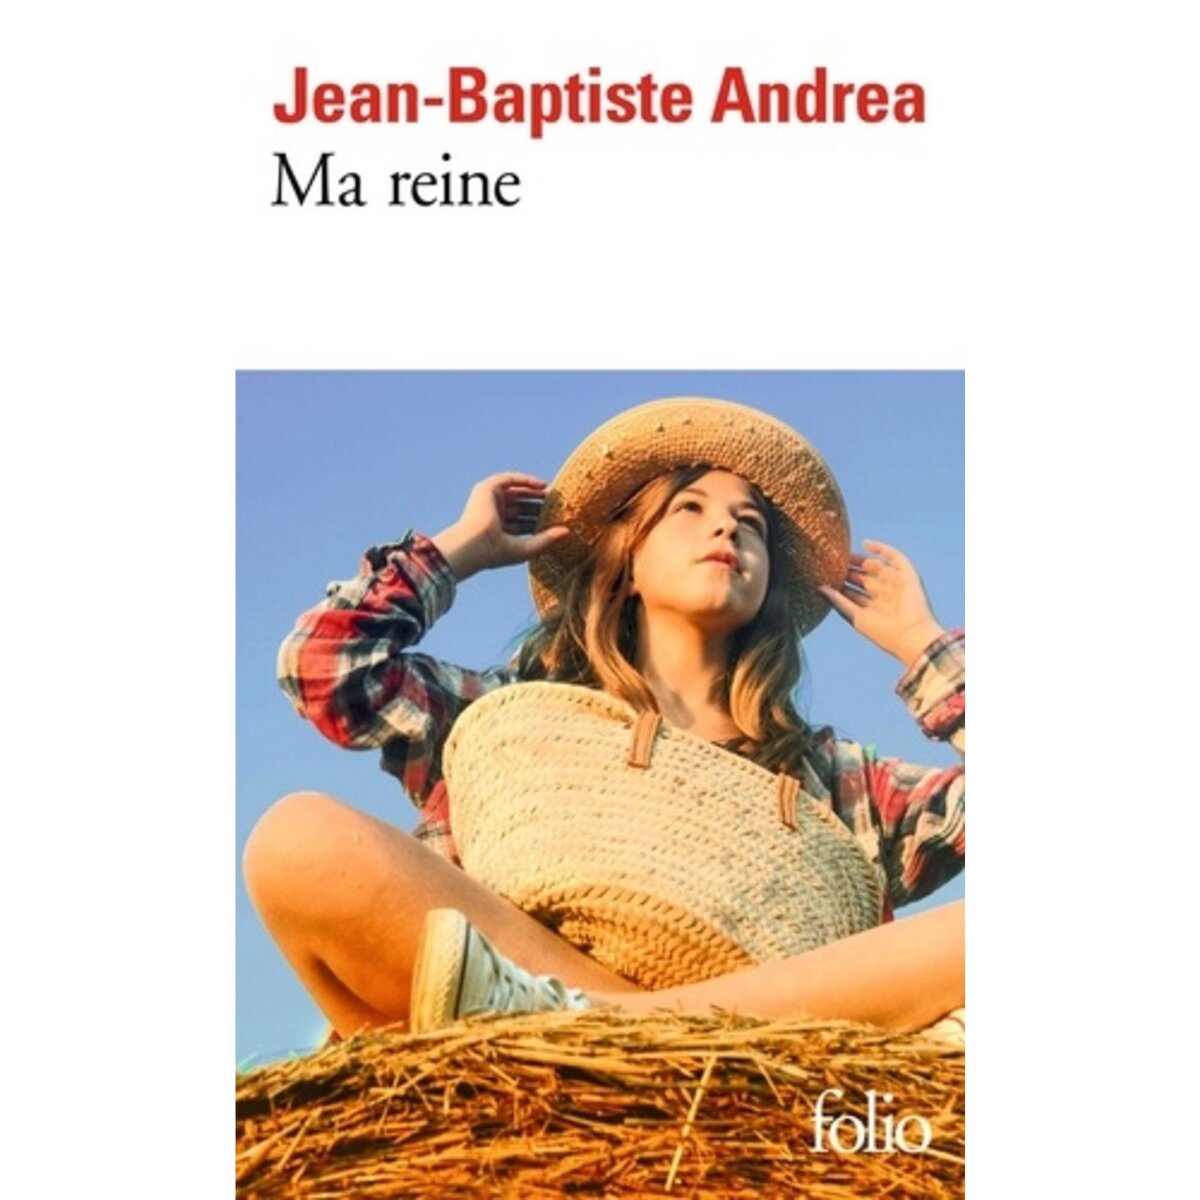  MA REINE, Andrea Jean-Baptiste